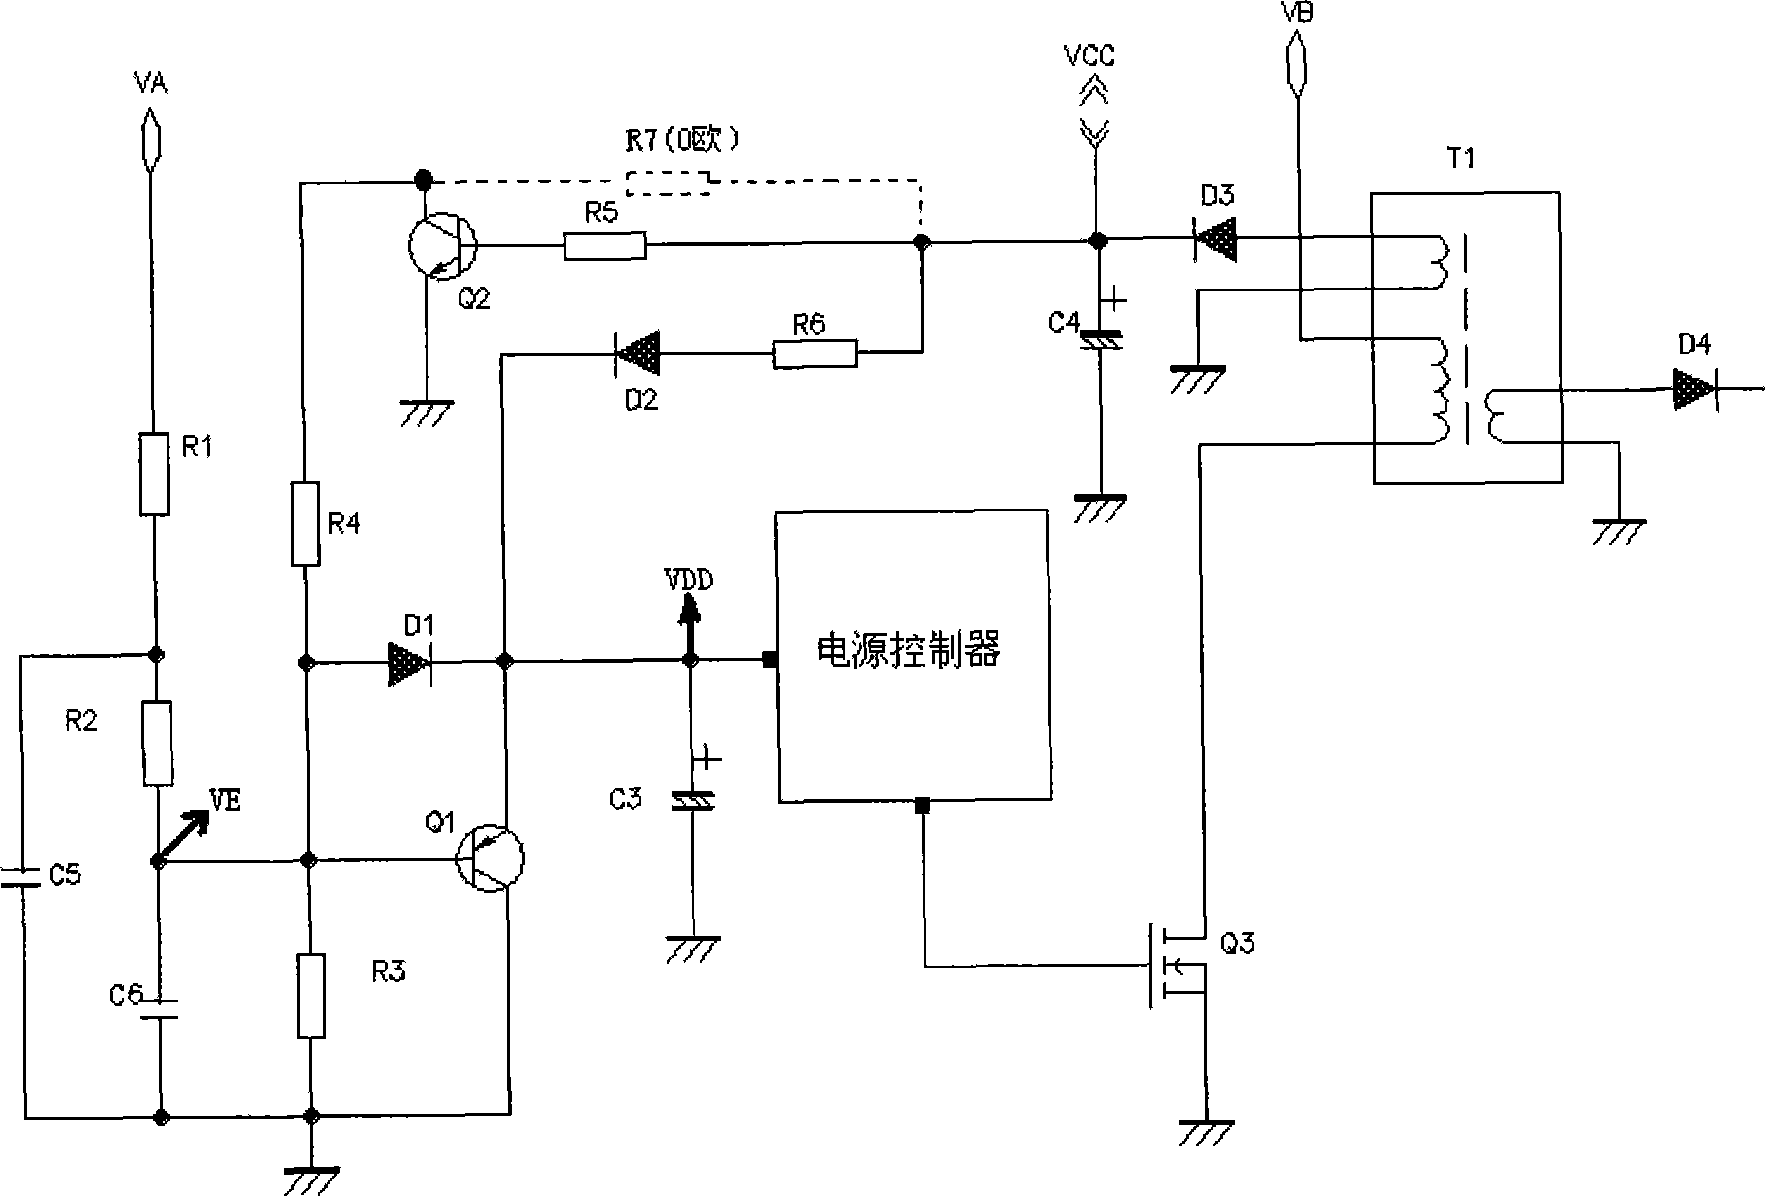 Under-voltage protection circuit